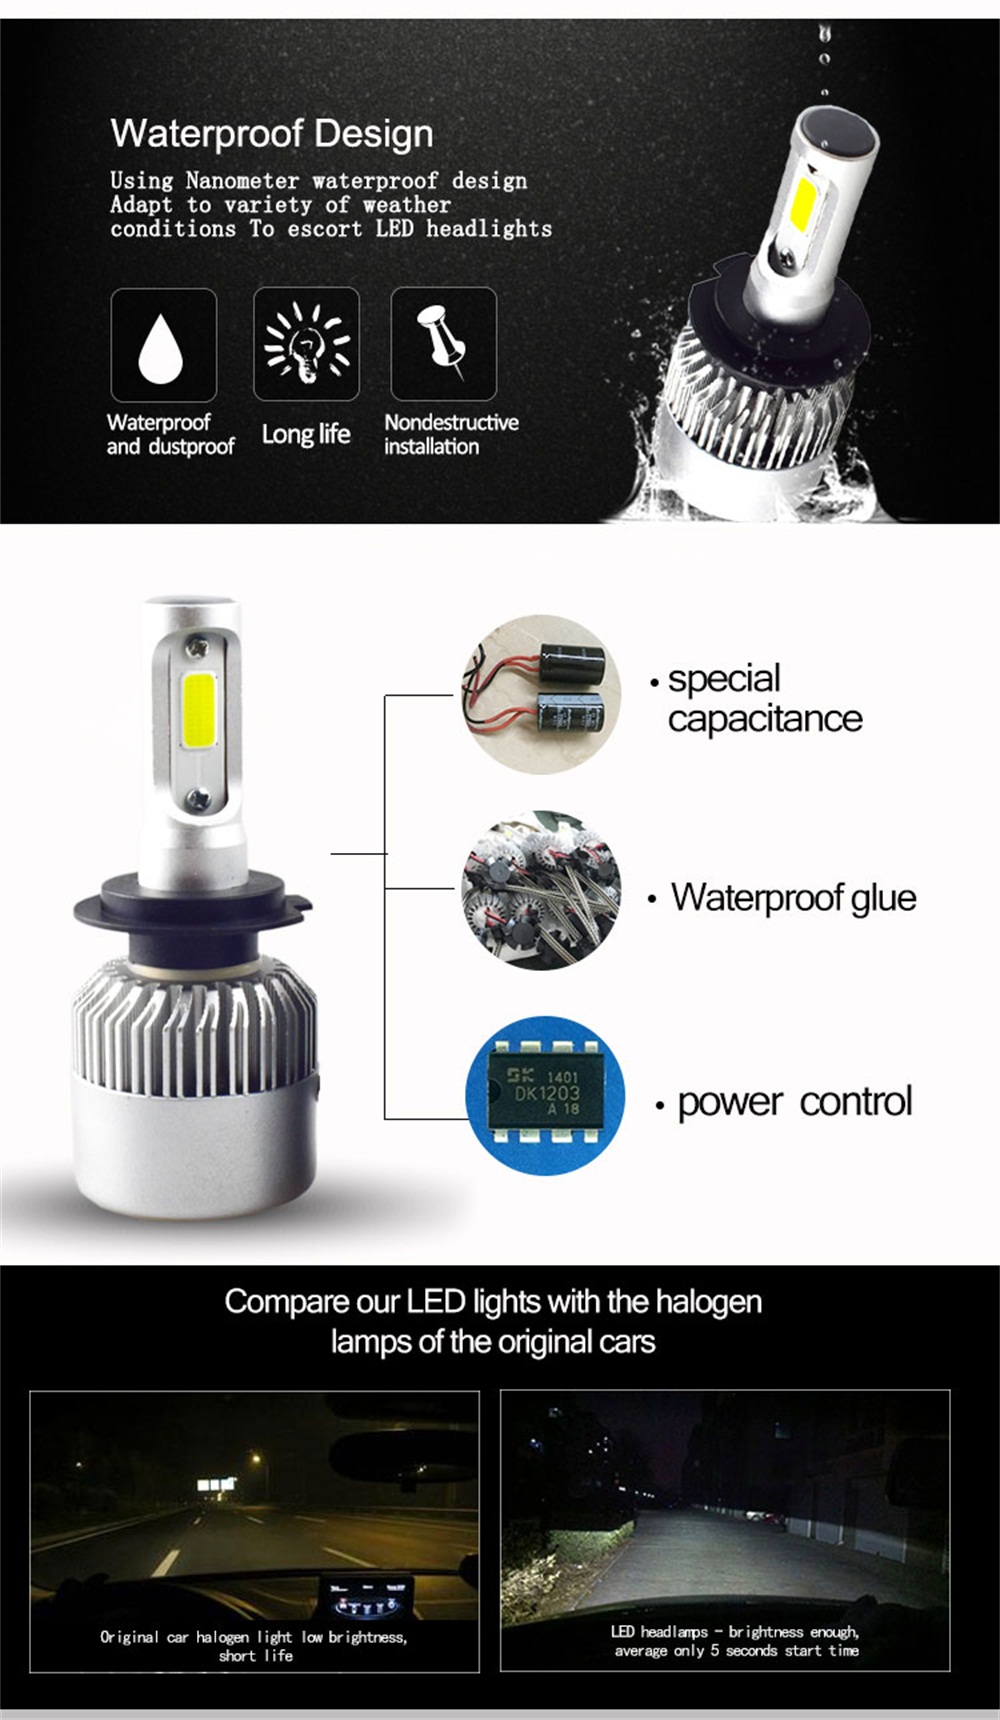 2 x H7 Super Bright Light Bulb Low Beam High Power LED Car Lamp 6500K White